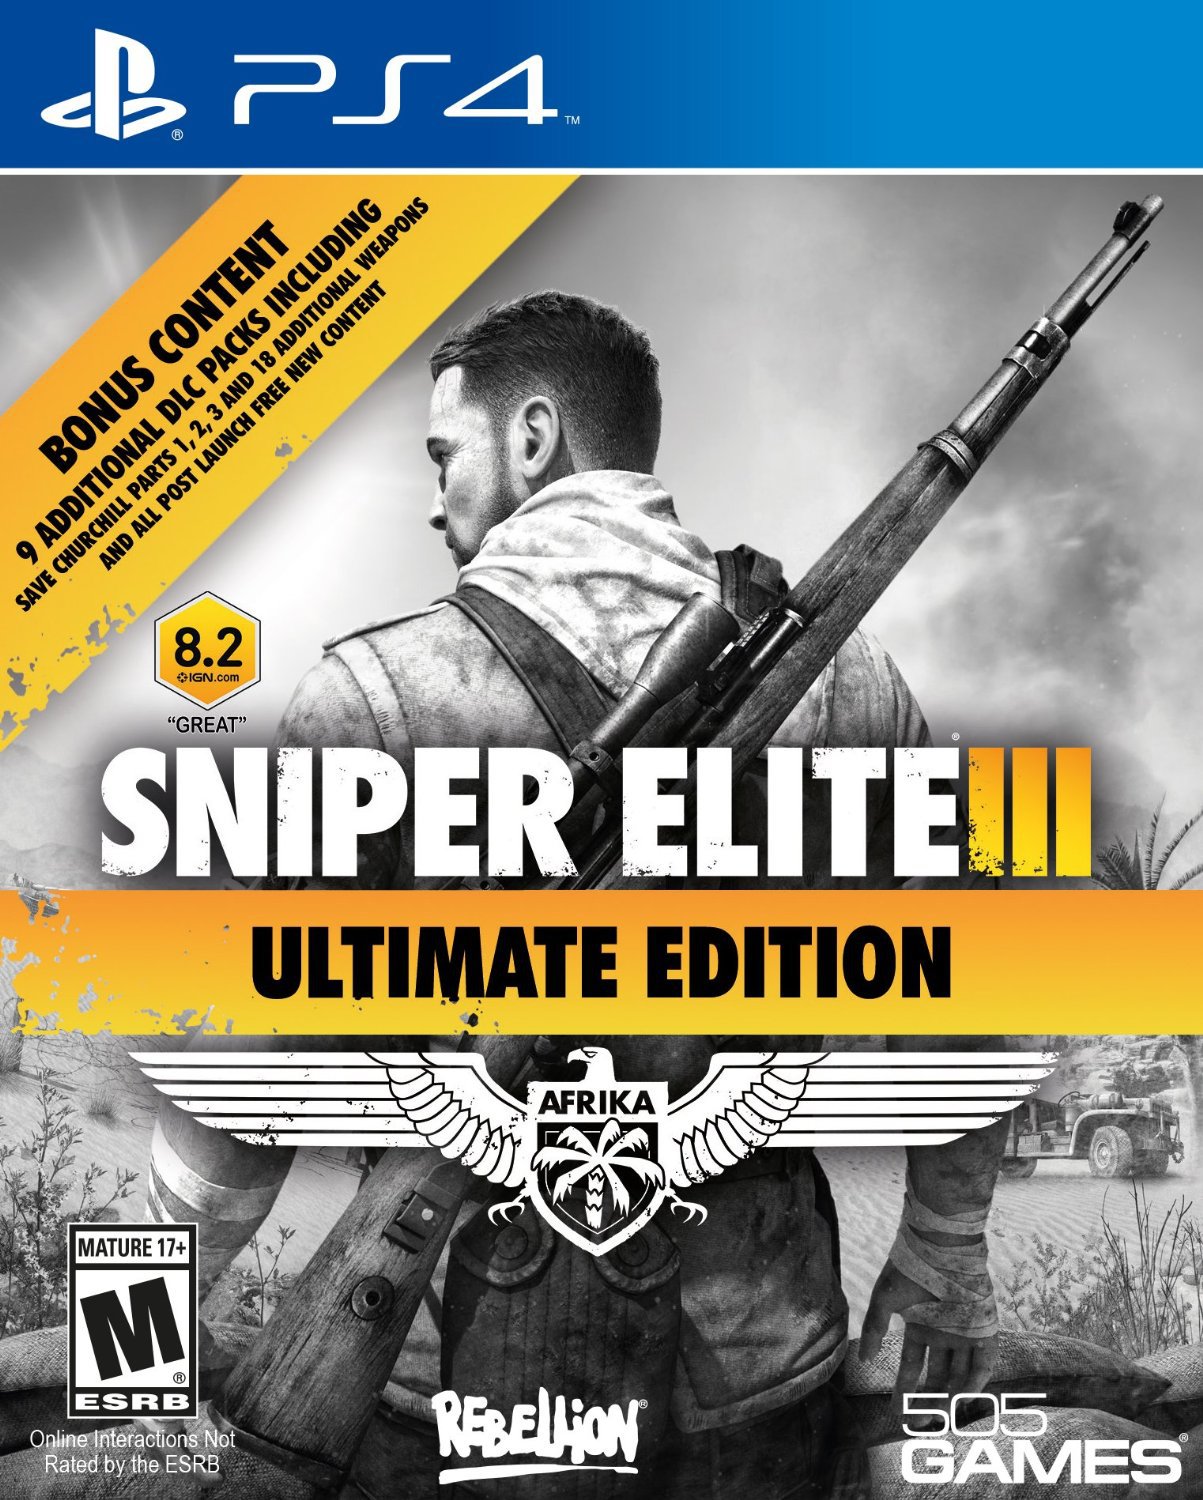 Sniper III: Ultimate Edition